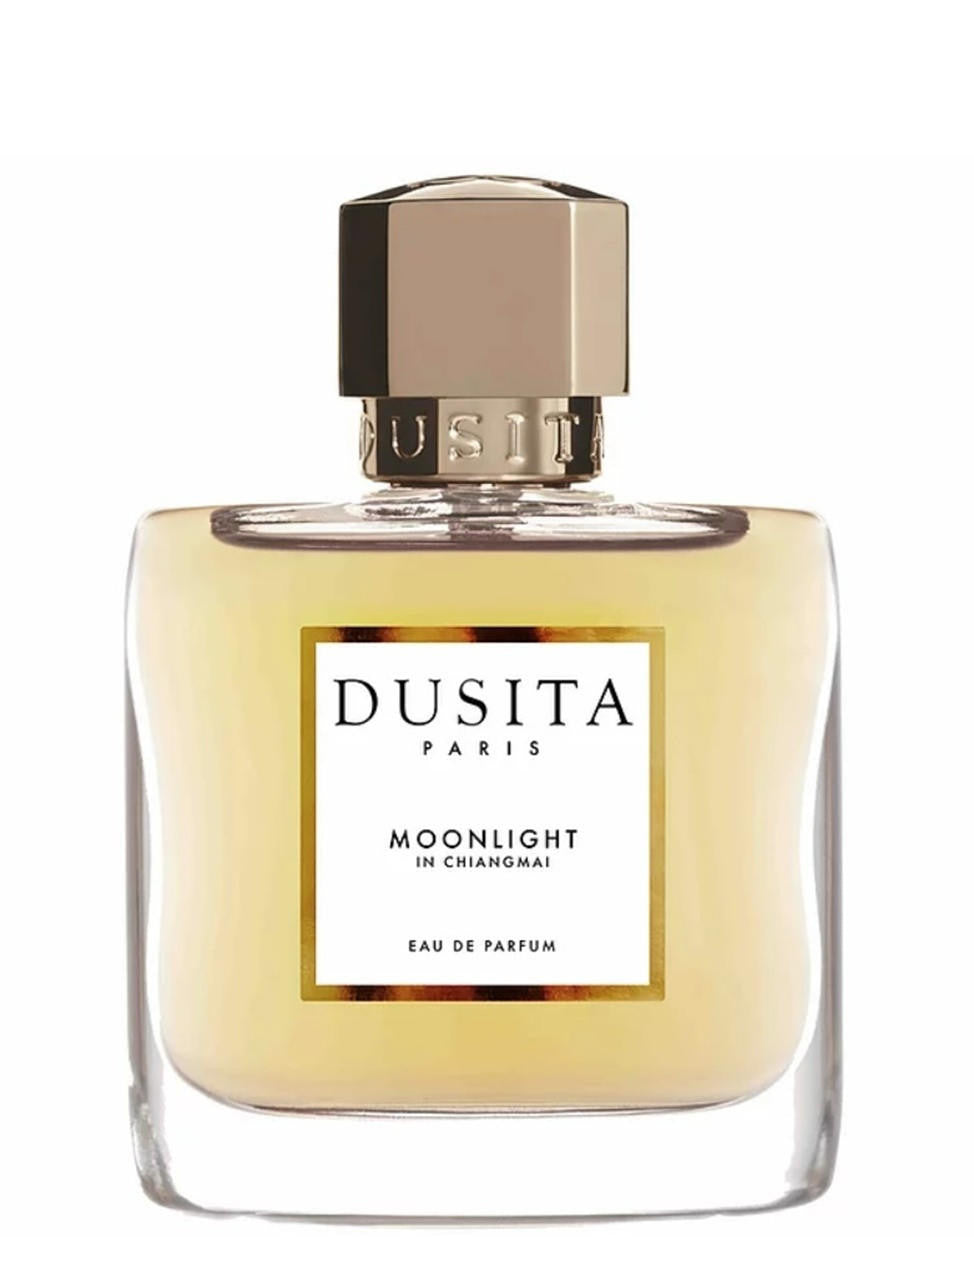  Dusita MOONLIGHT IN CHIANGMAI Eau de Parfum 